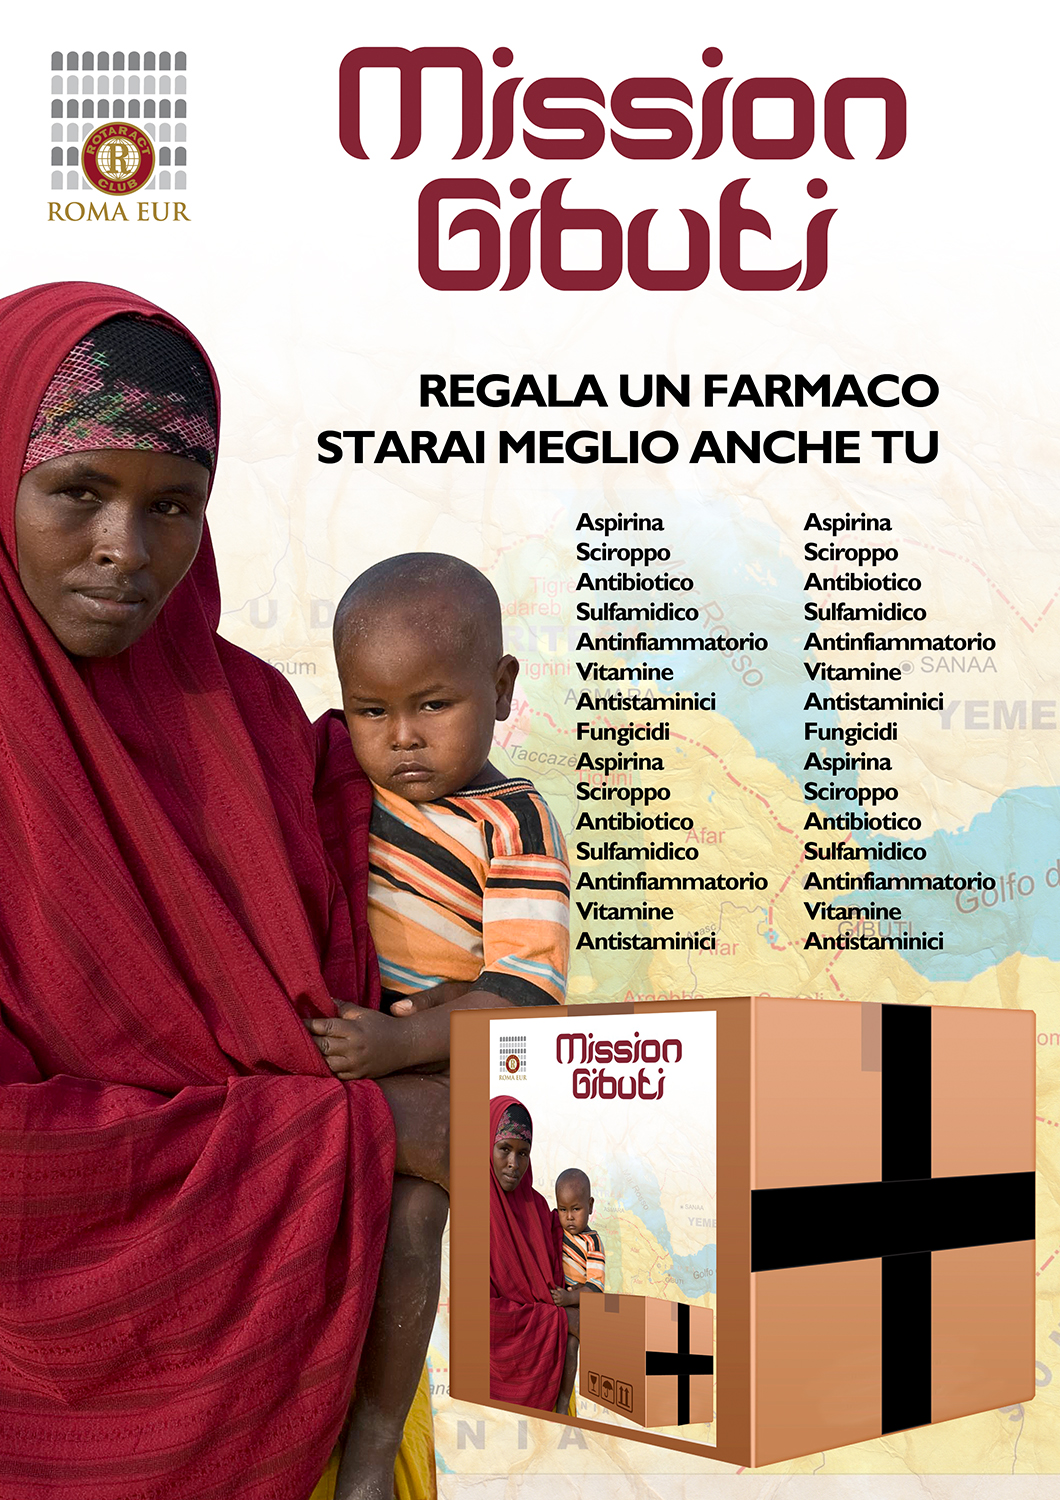 Rotary, rotaract, Mission Gibuti, regala un farmaco, farmaci, manifesto